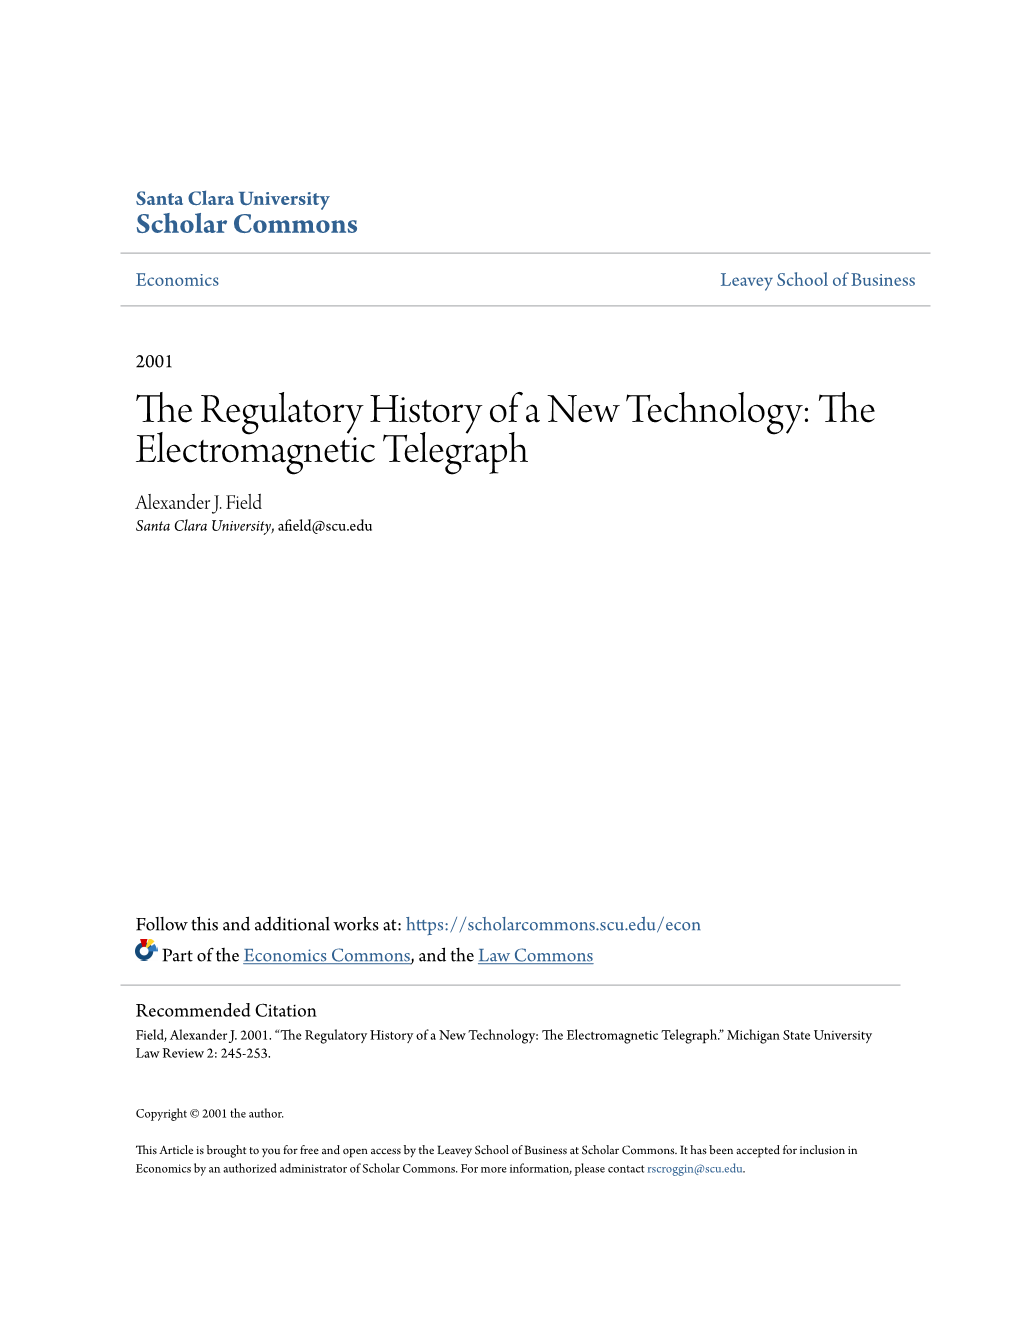 The Electromagnetic Telegraph Alexander J